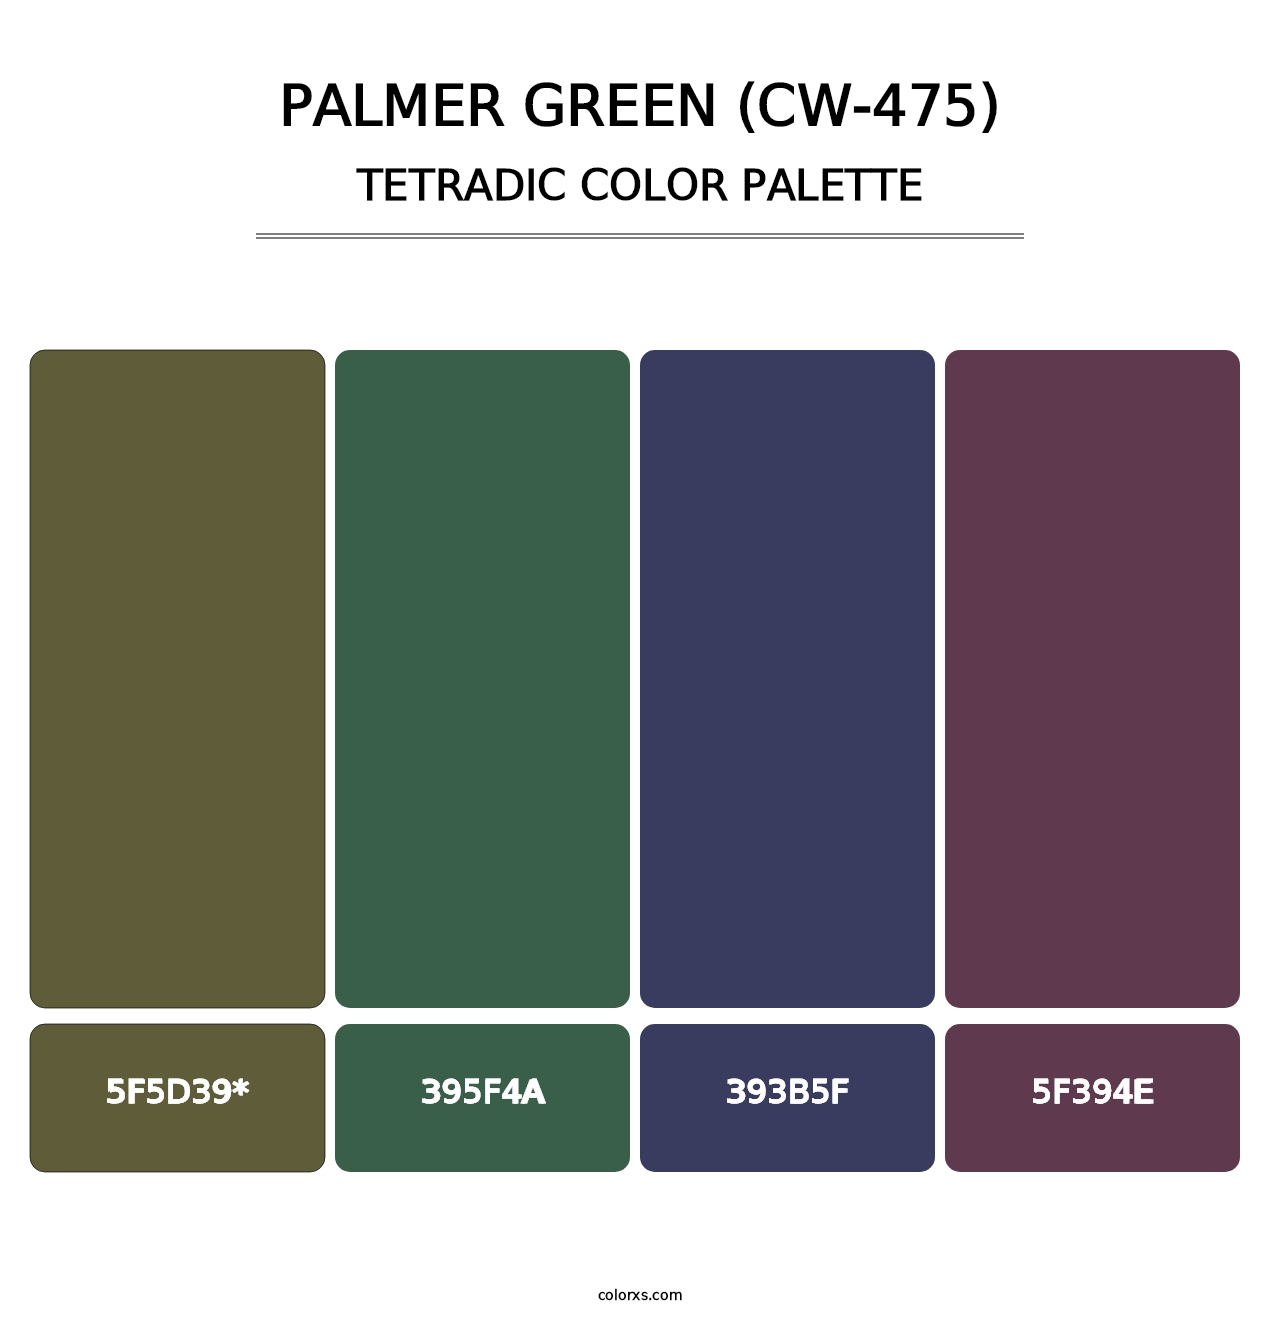 Palmer Green (CW-475) - Tetradic Color Palette